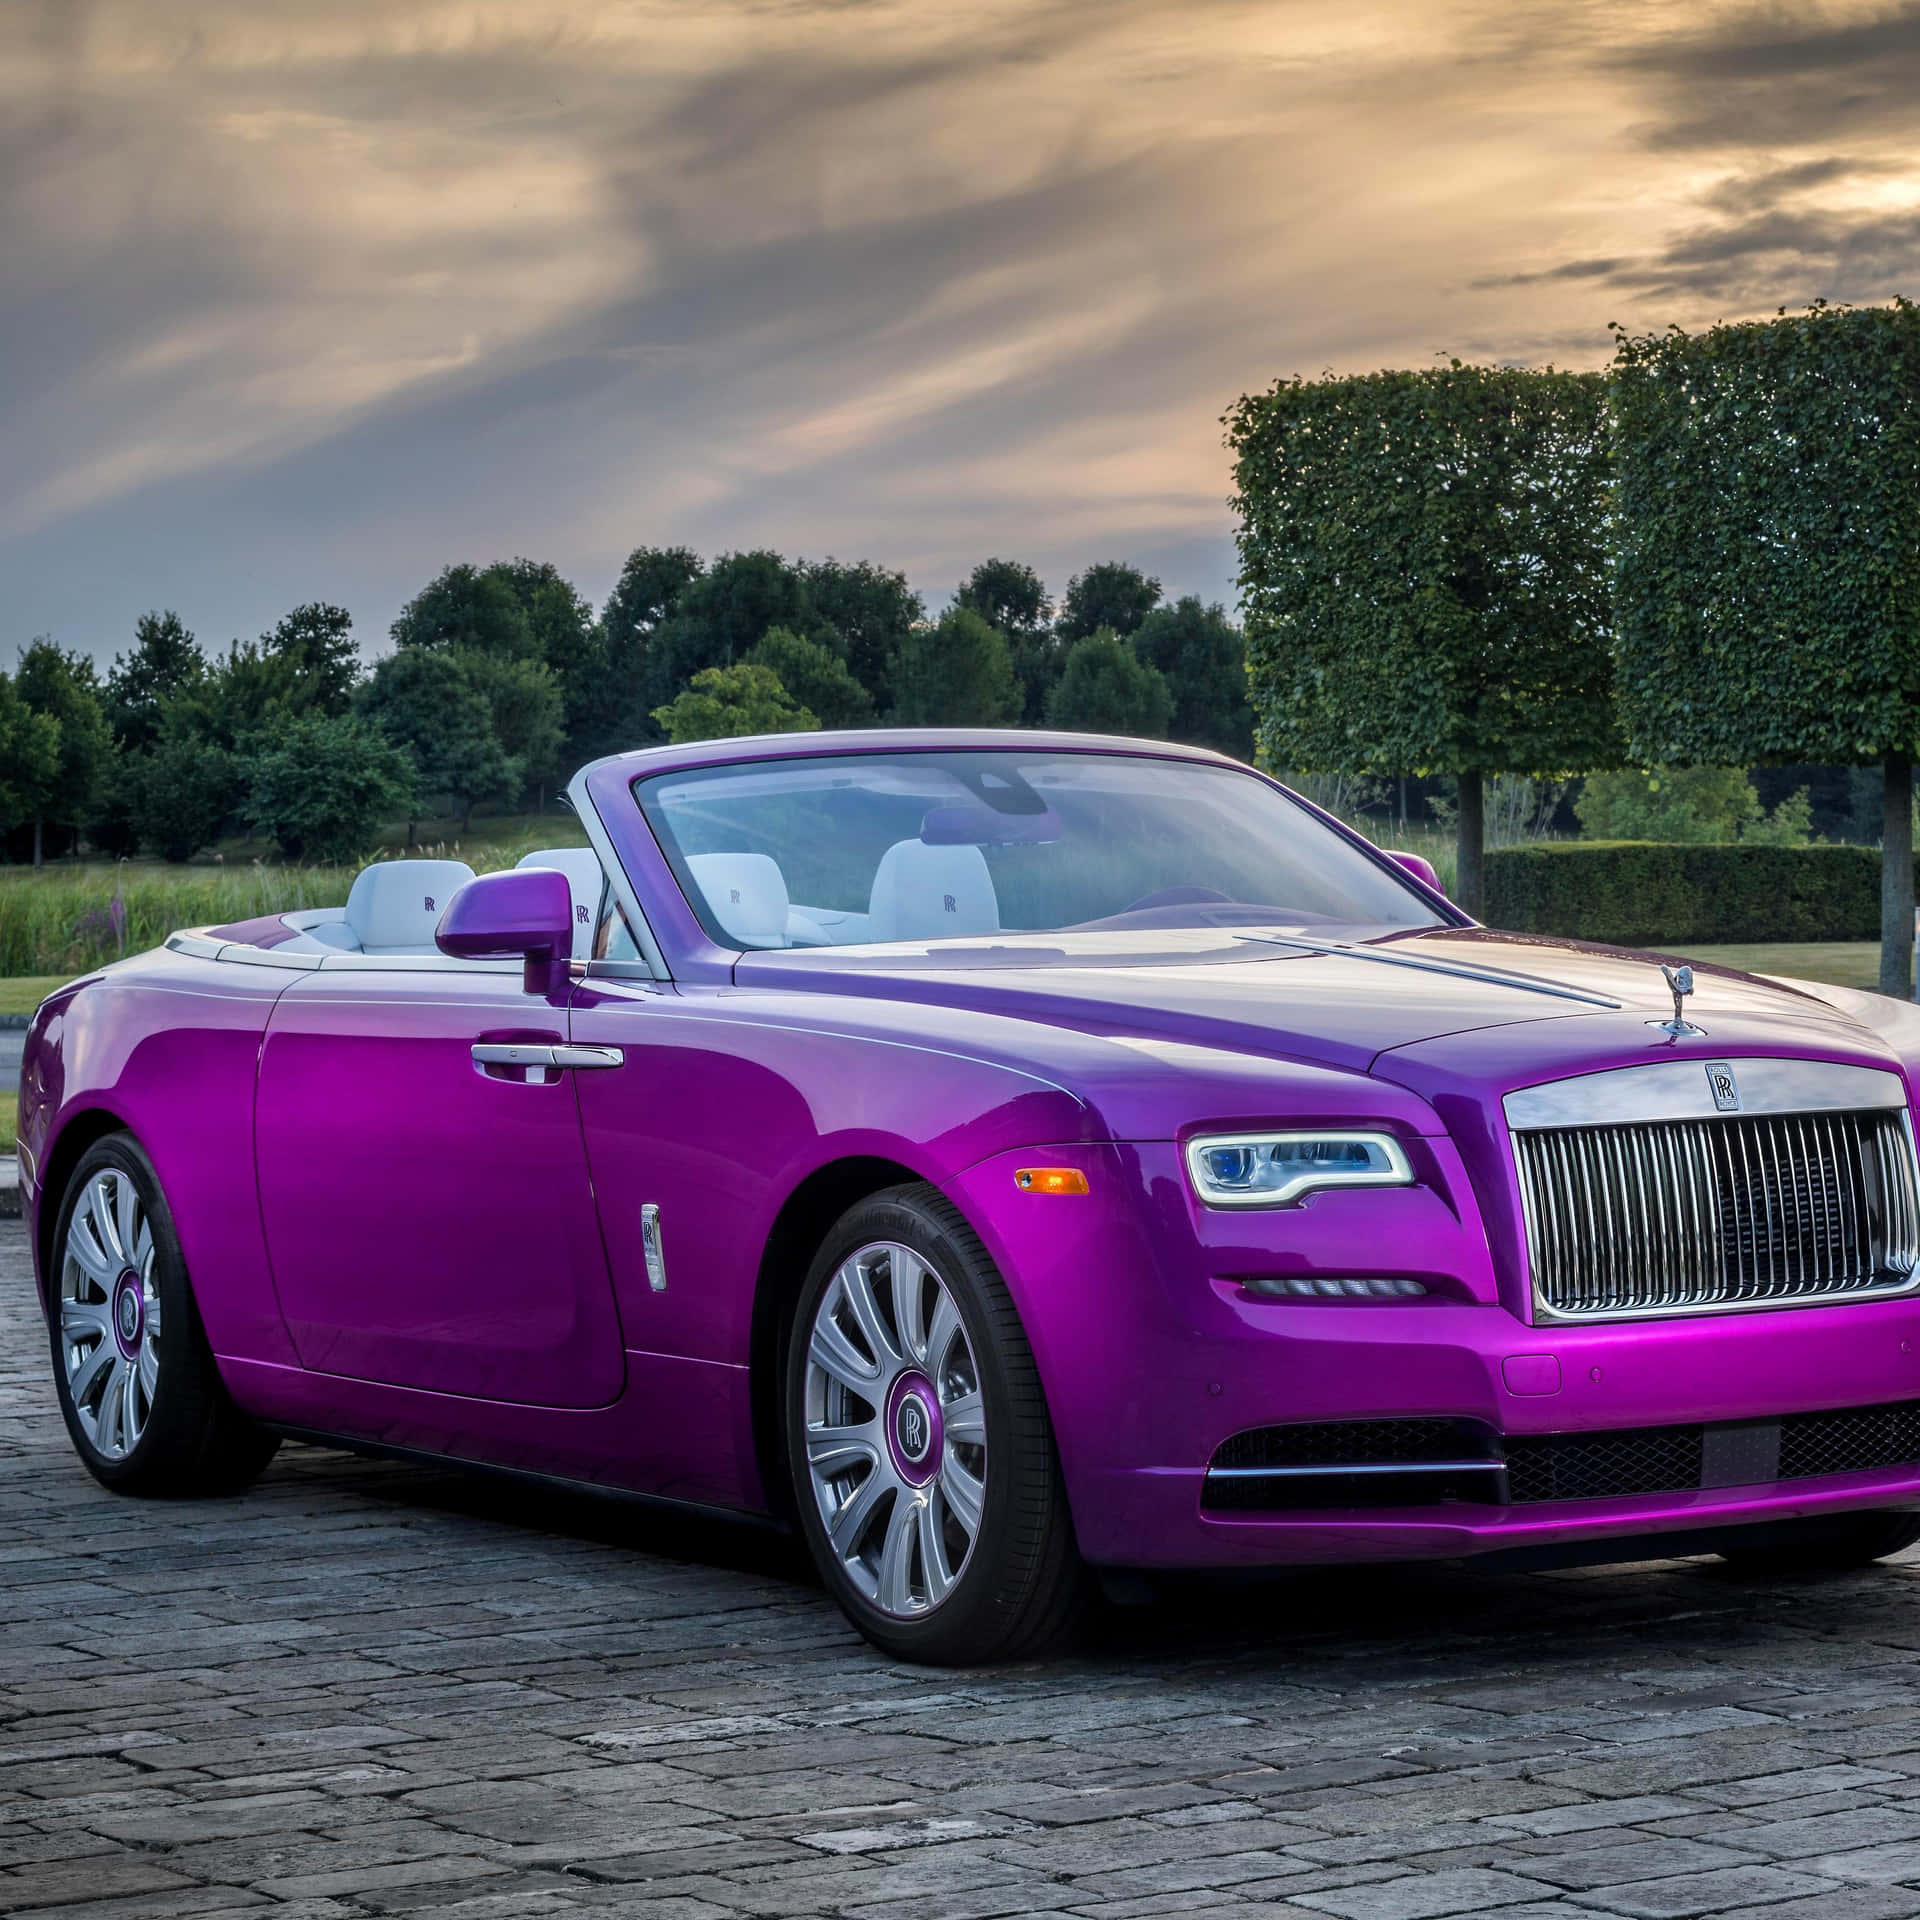 Caption: Luxurious Rolls Royce Dawn At Sunset Wallpaper